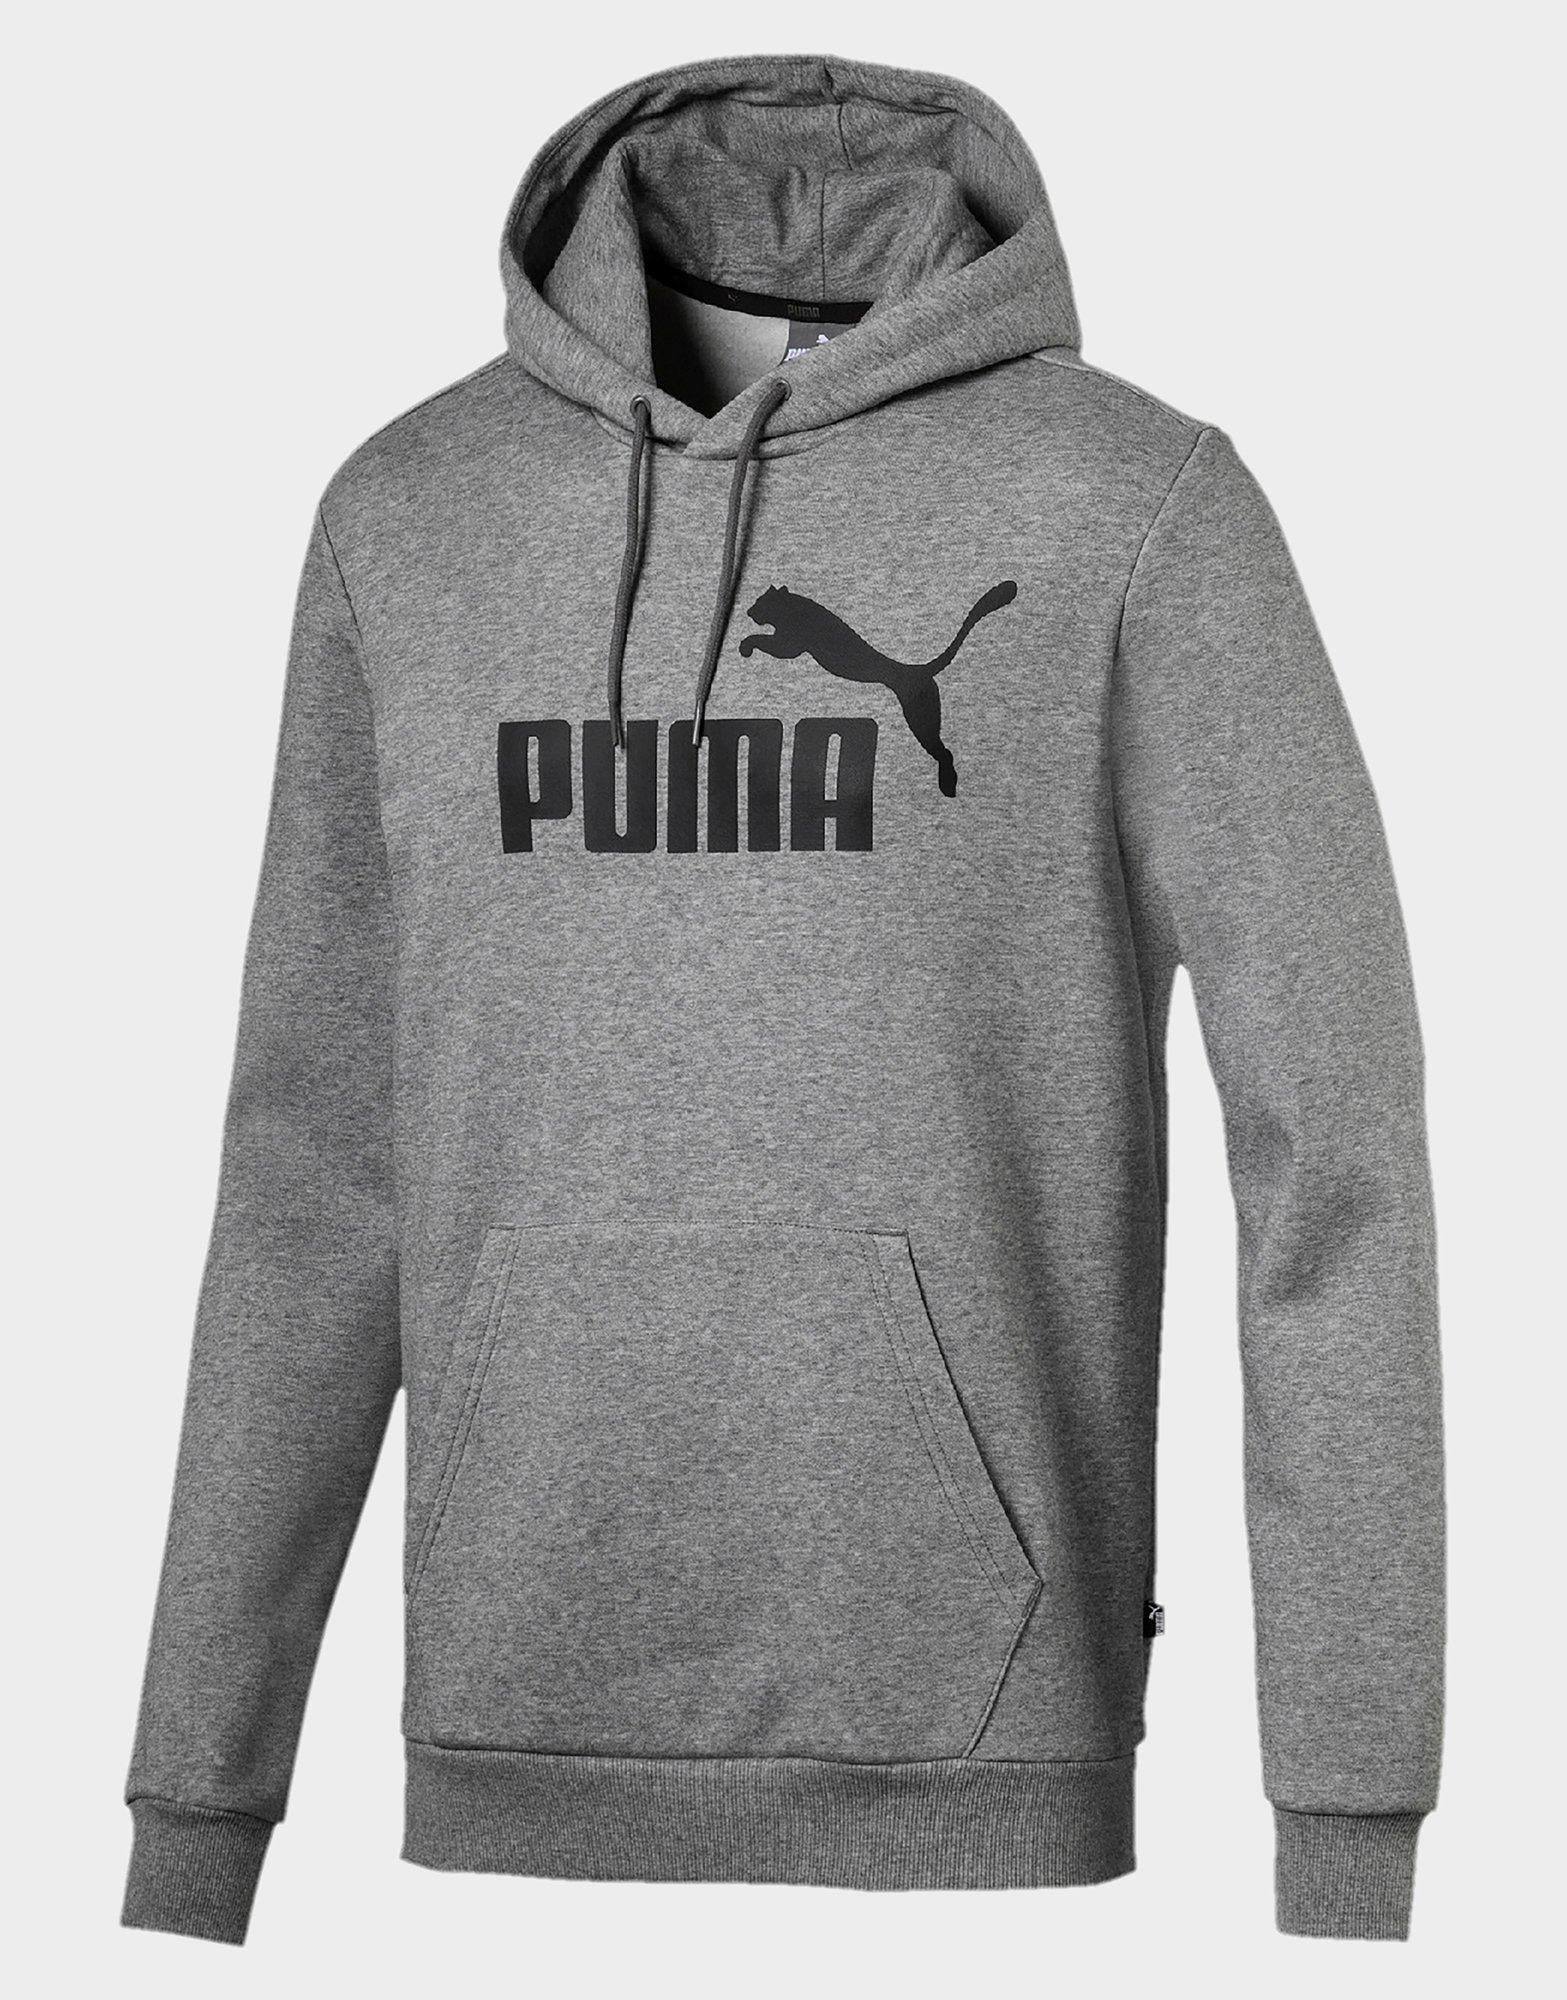 grey hoodie puma